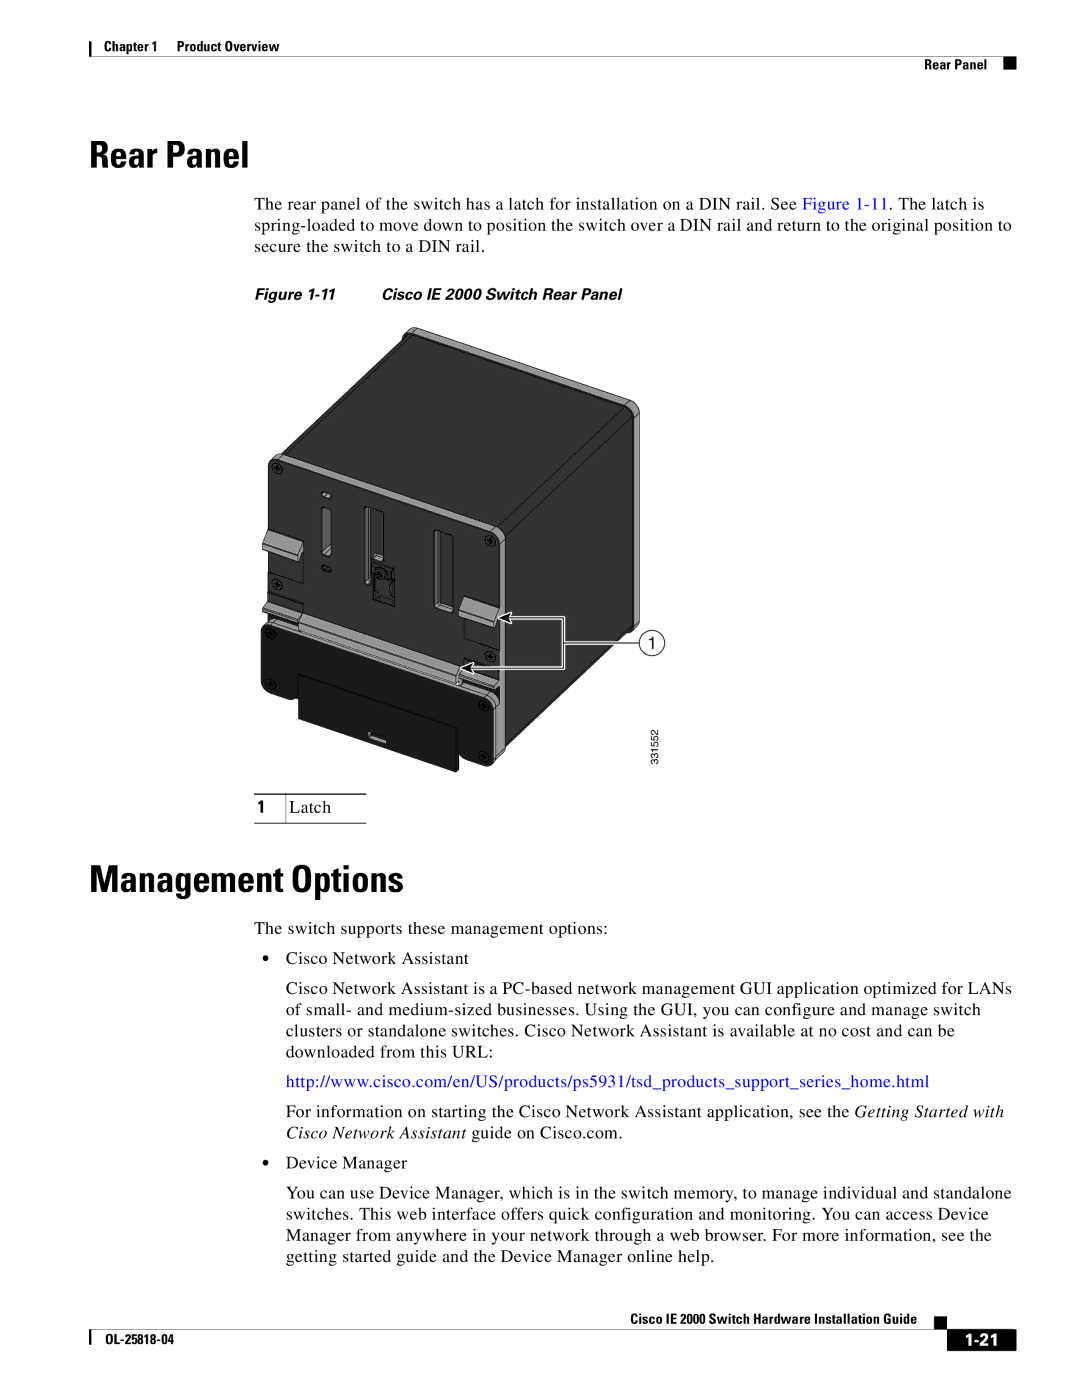 Cisco Systems IE200016TCB, IE20004TSB, IE20004TSL manual Rear Panel, Management Options 